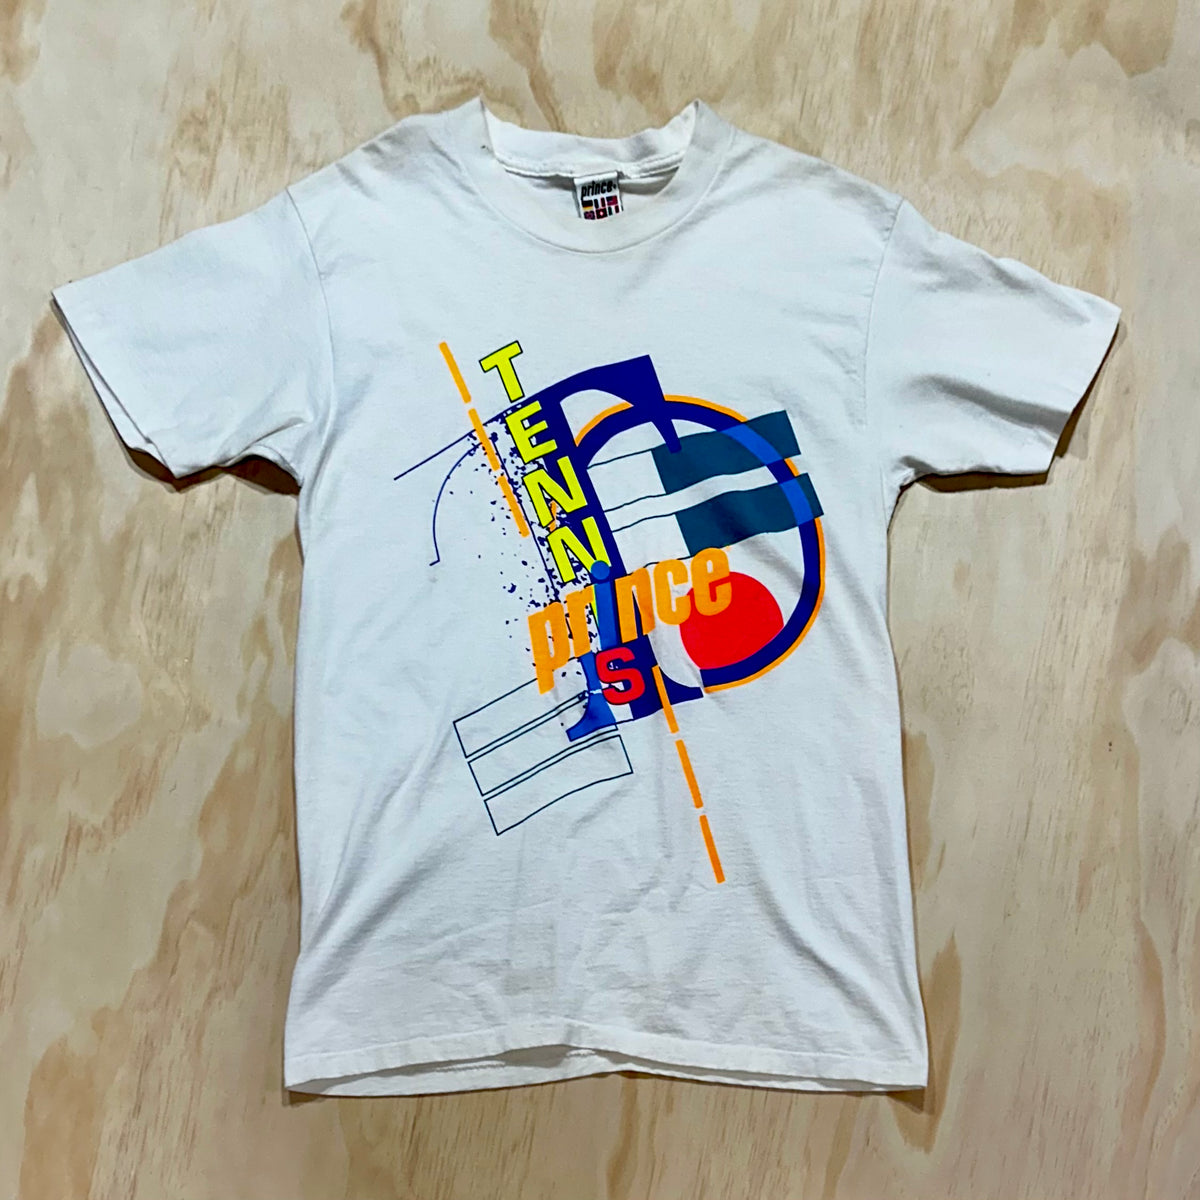 Vintage Tennis Prince Performance Apparel 1990's T-Shirt